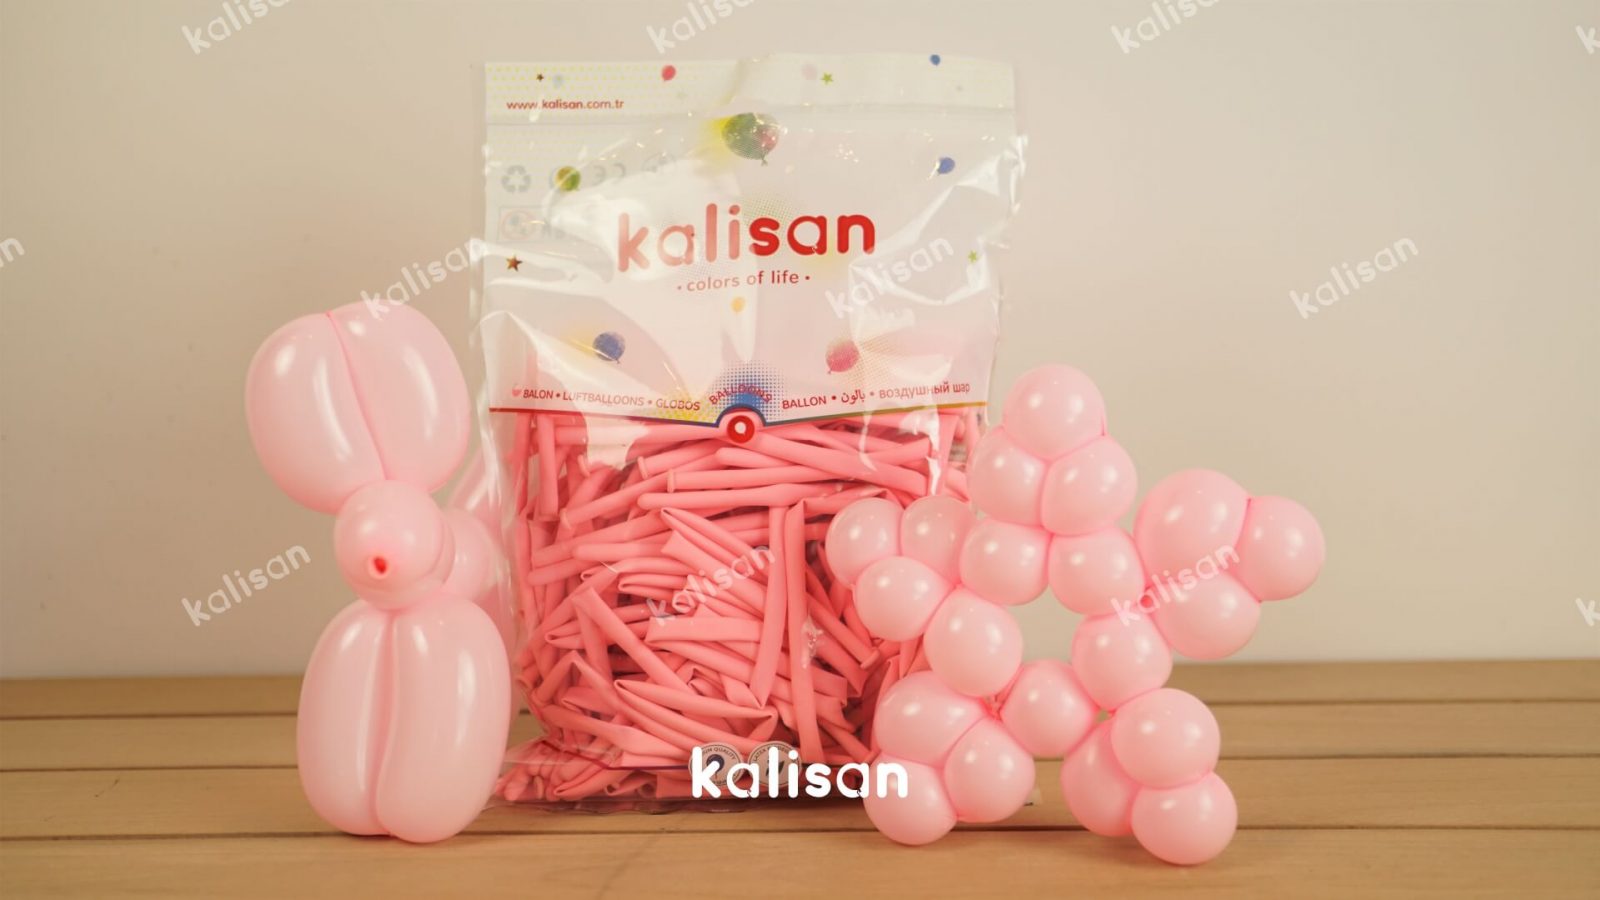 Modelling 260 Model Balonlari Kalisan Balon